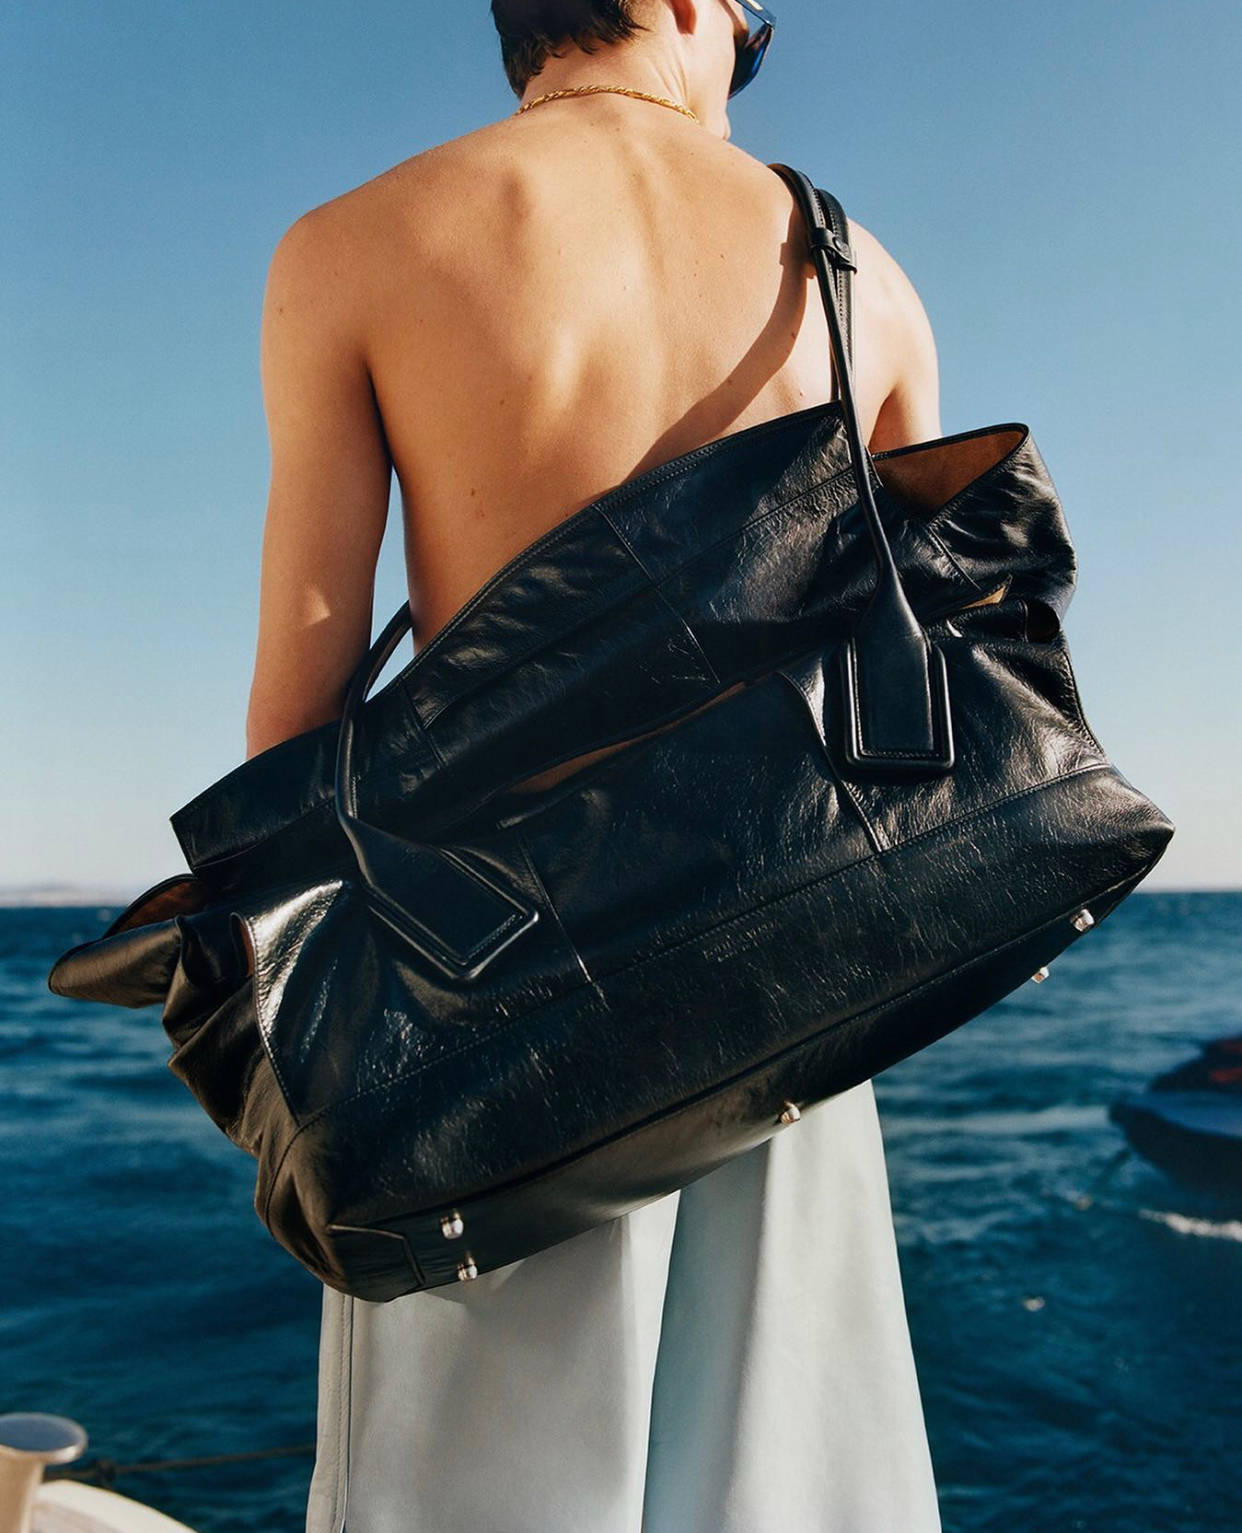 Topless Model With Black Bottega Veneta Bag Wallpaper